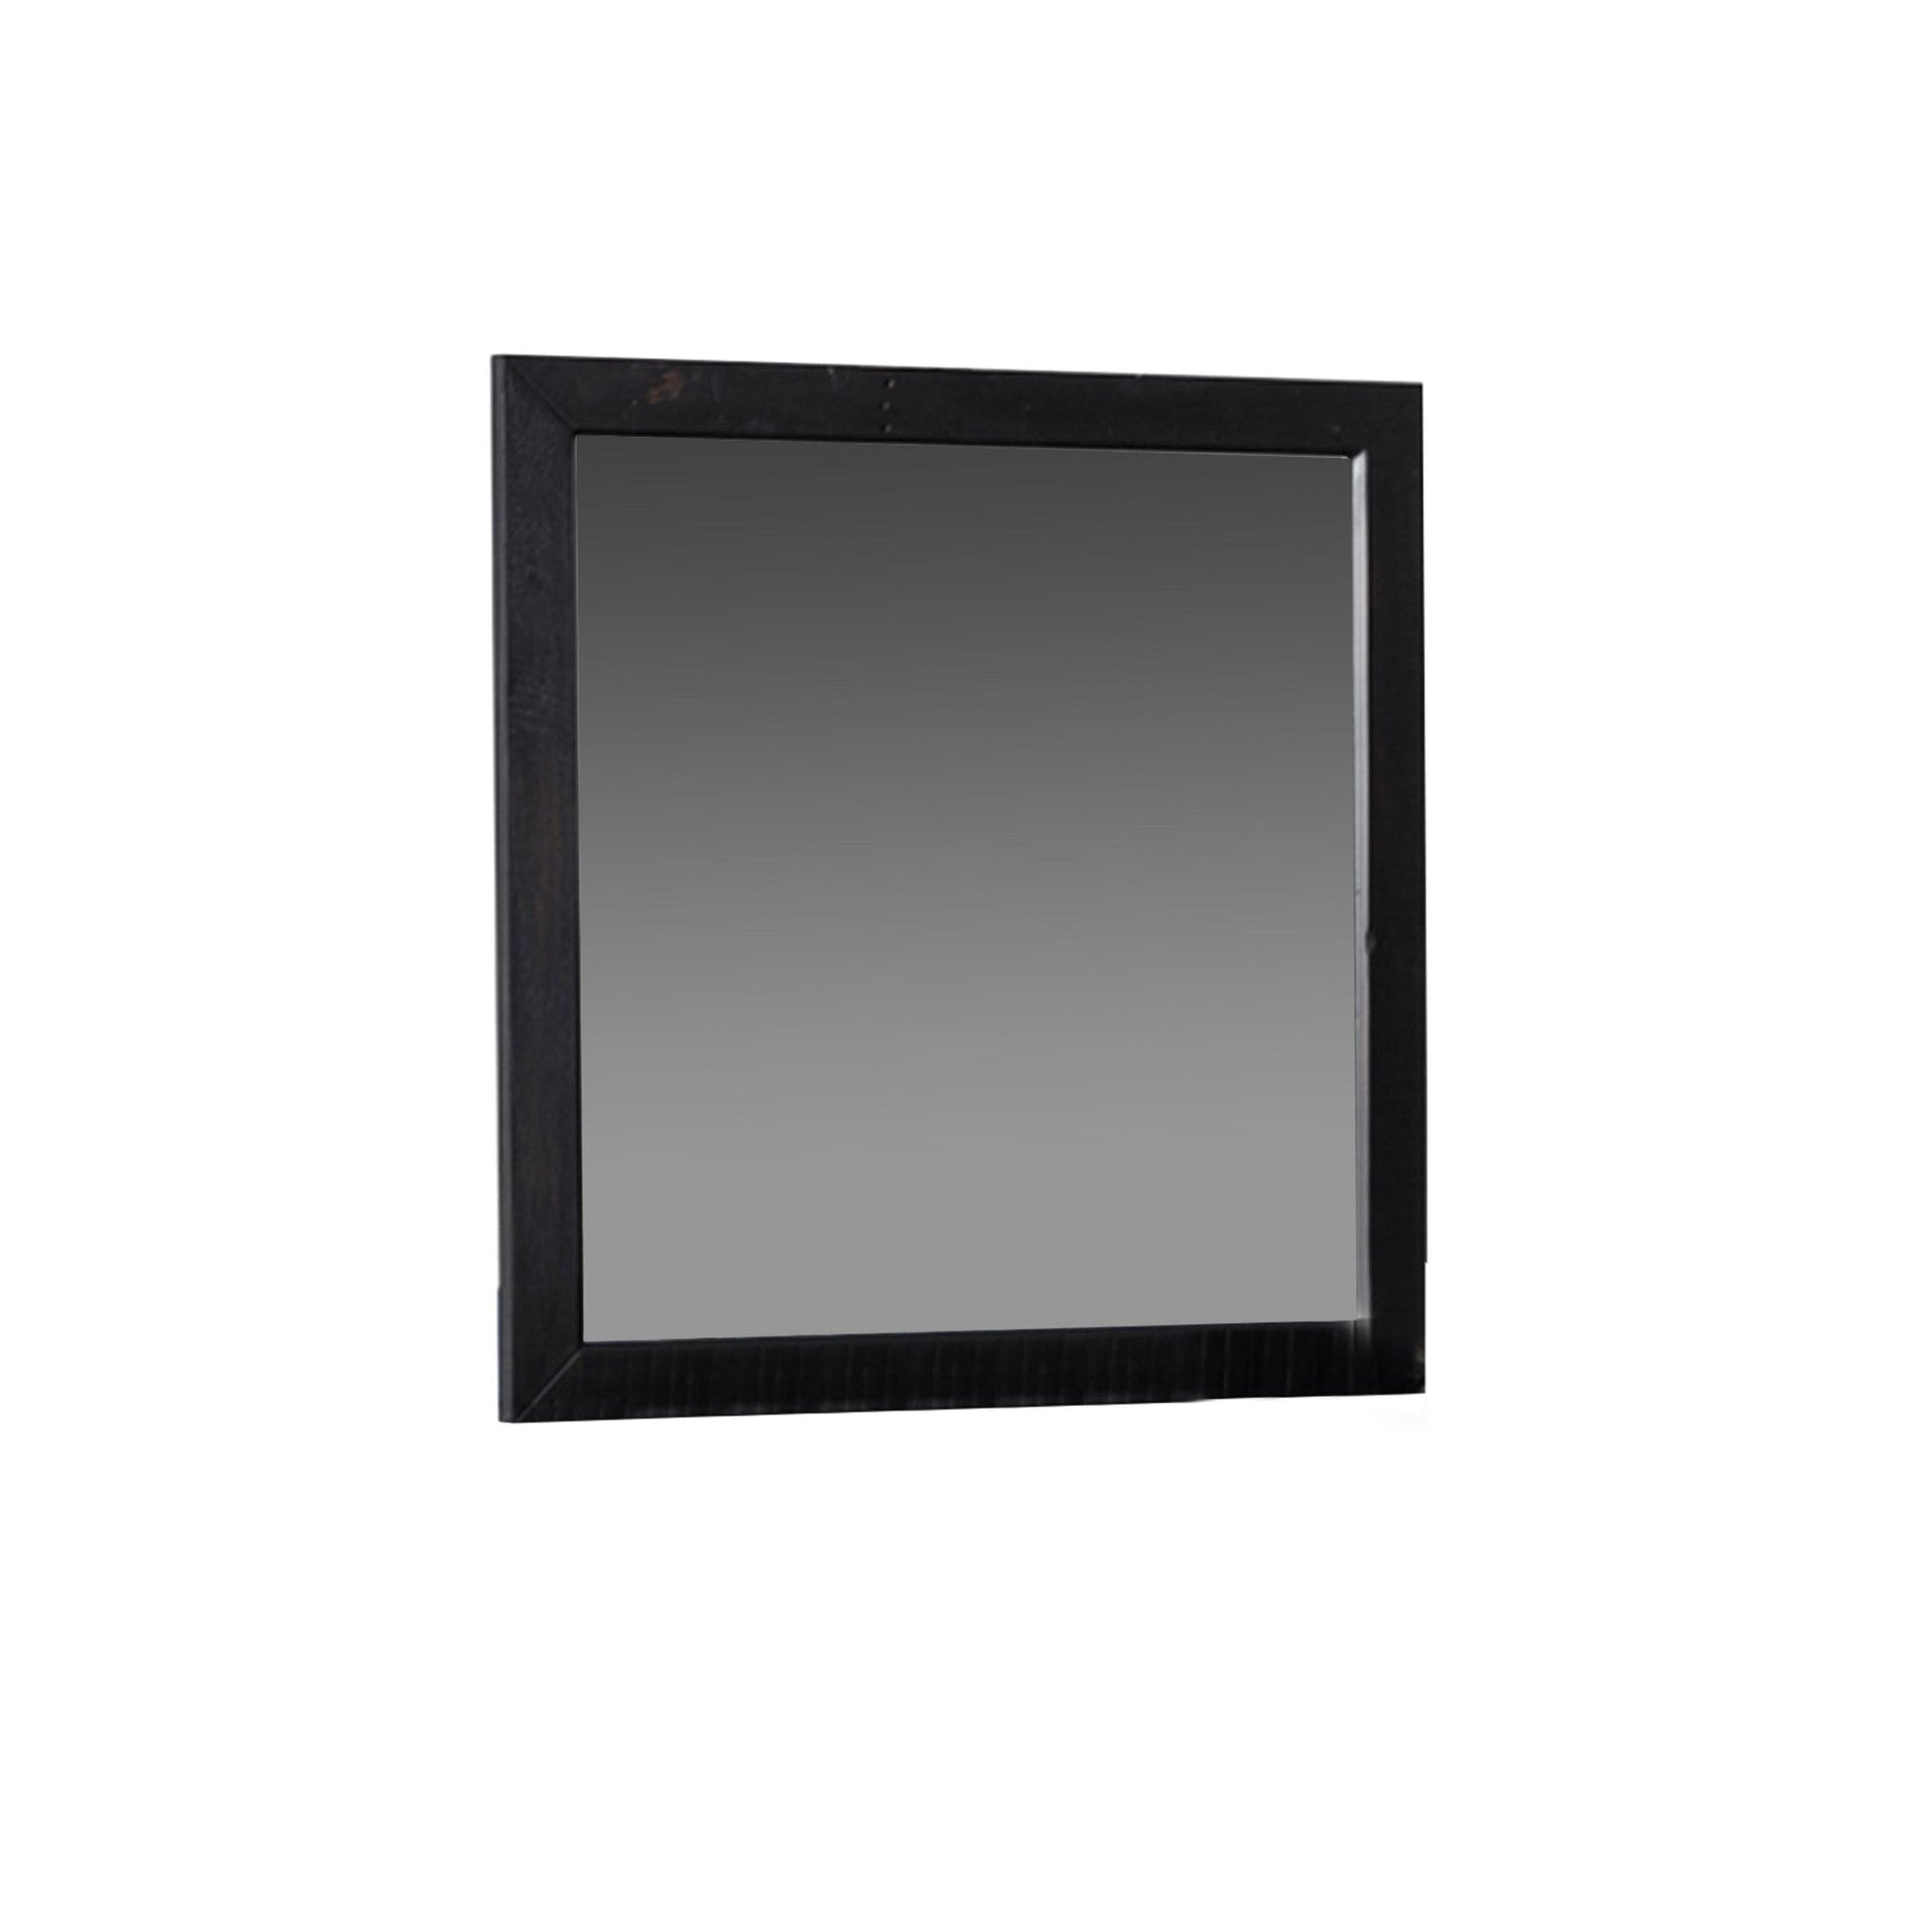 Benzara Antique Black Contemporary Style Rectangular Mirror With Wooden Frame